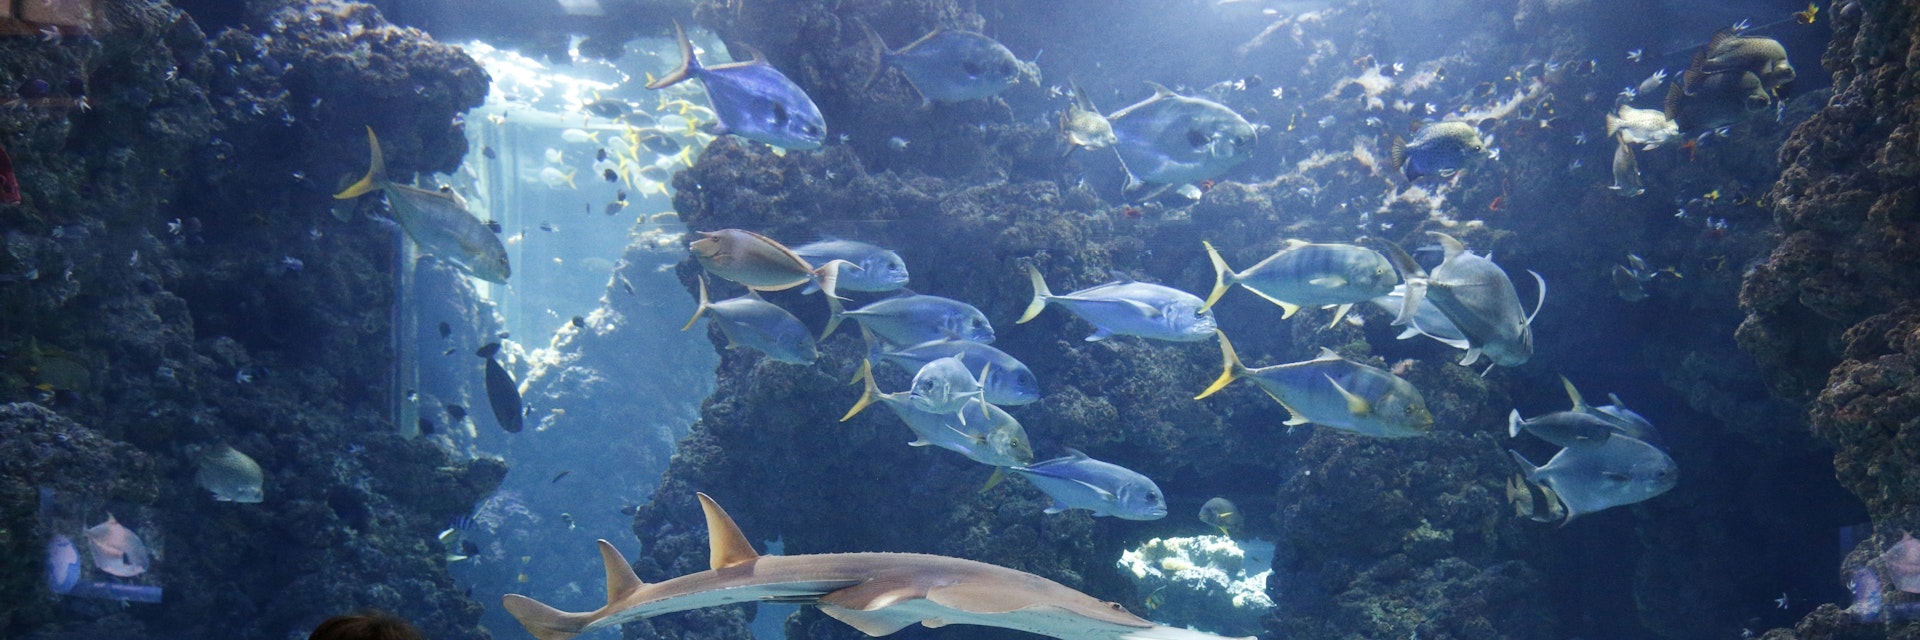 The aquarium of the Oceanographic Museum of Monaco. (Photo by: Godong/UIG via Getty Images)